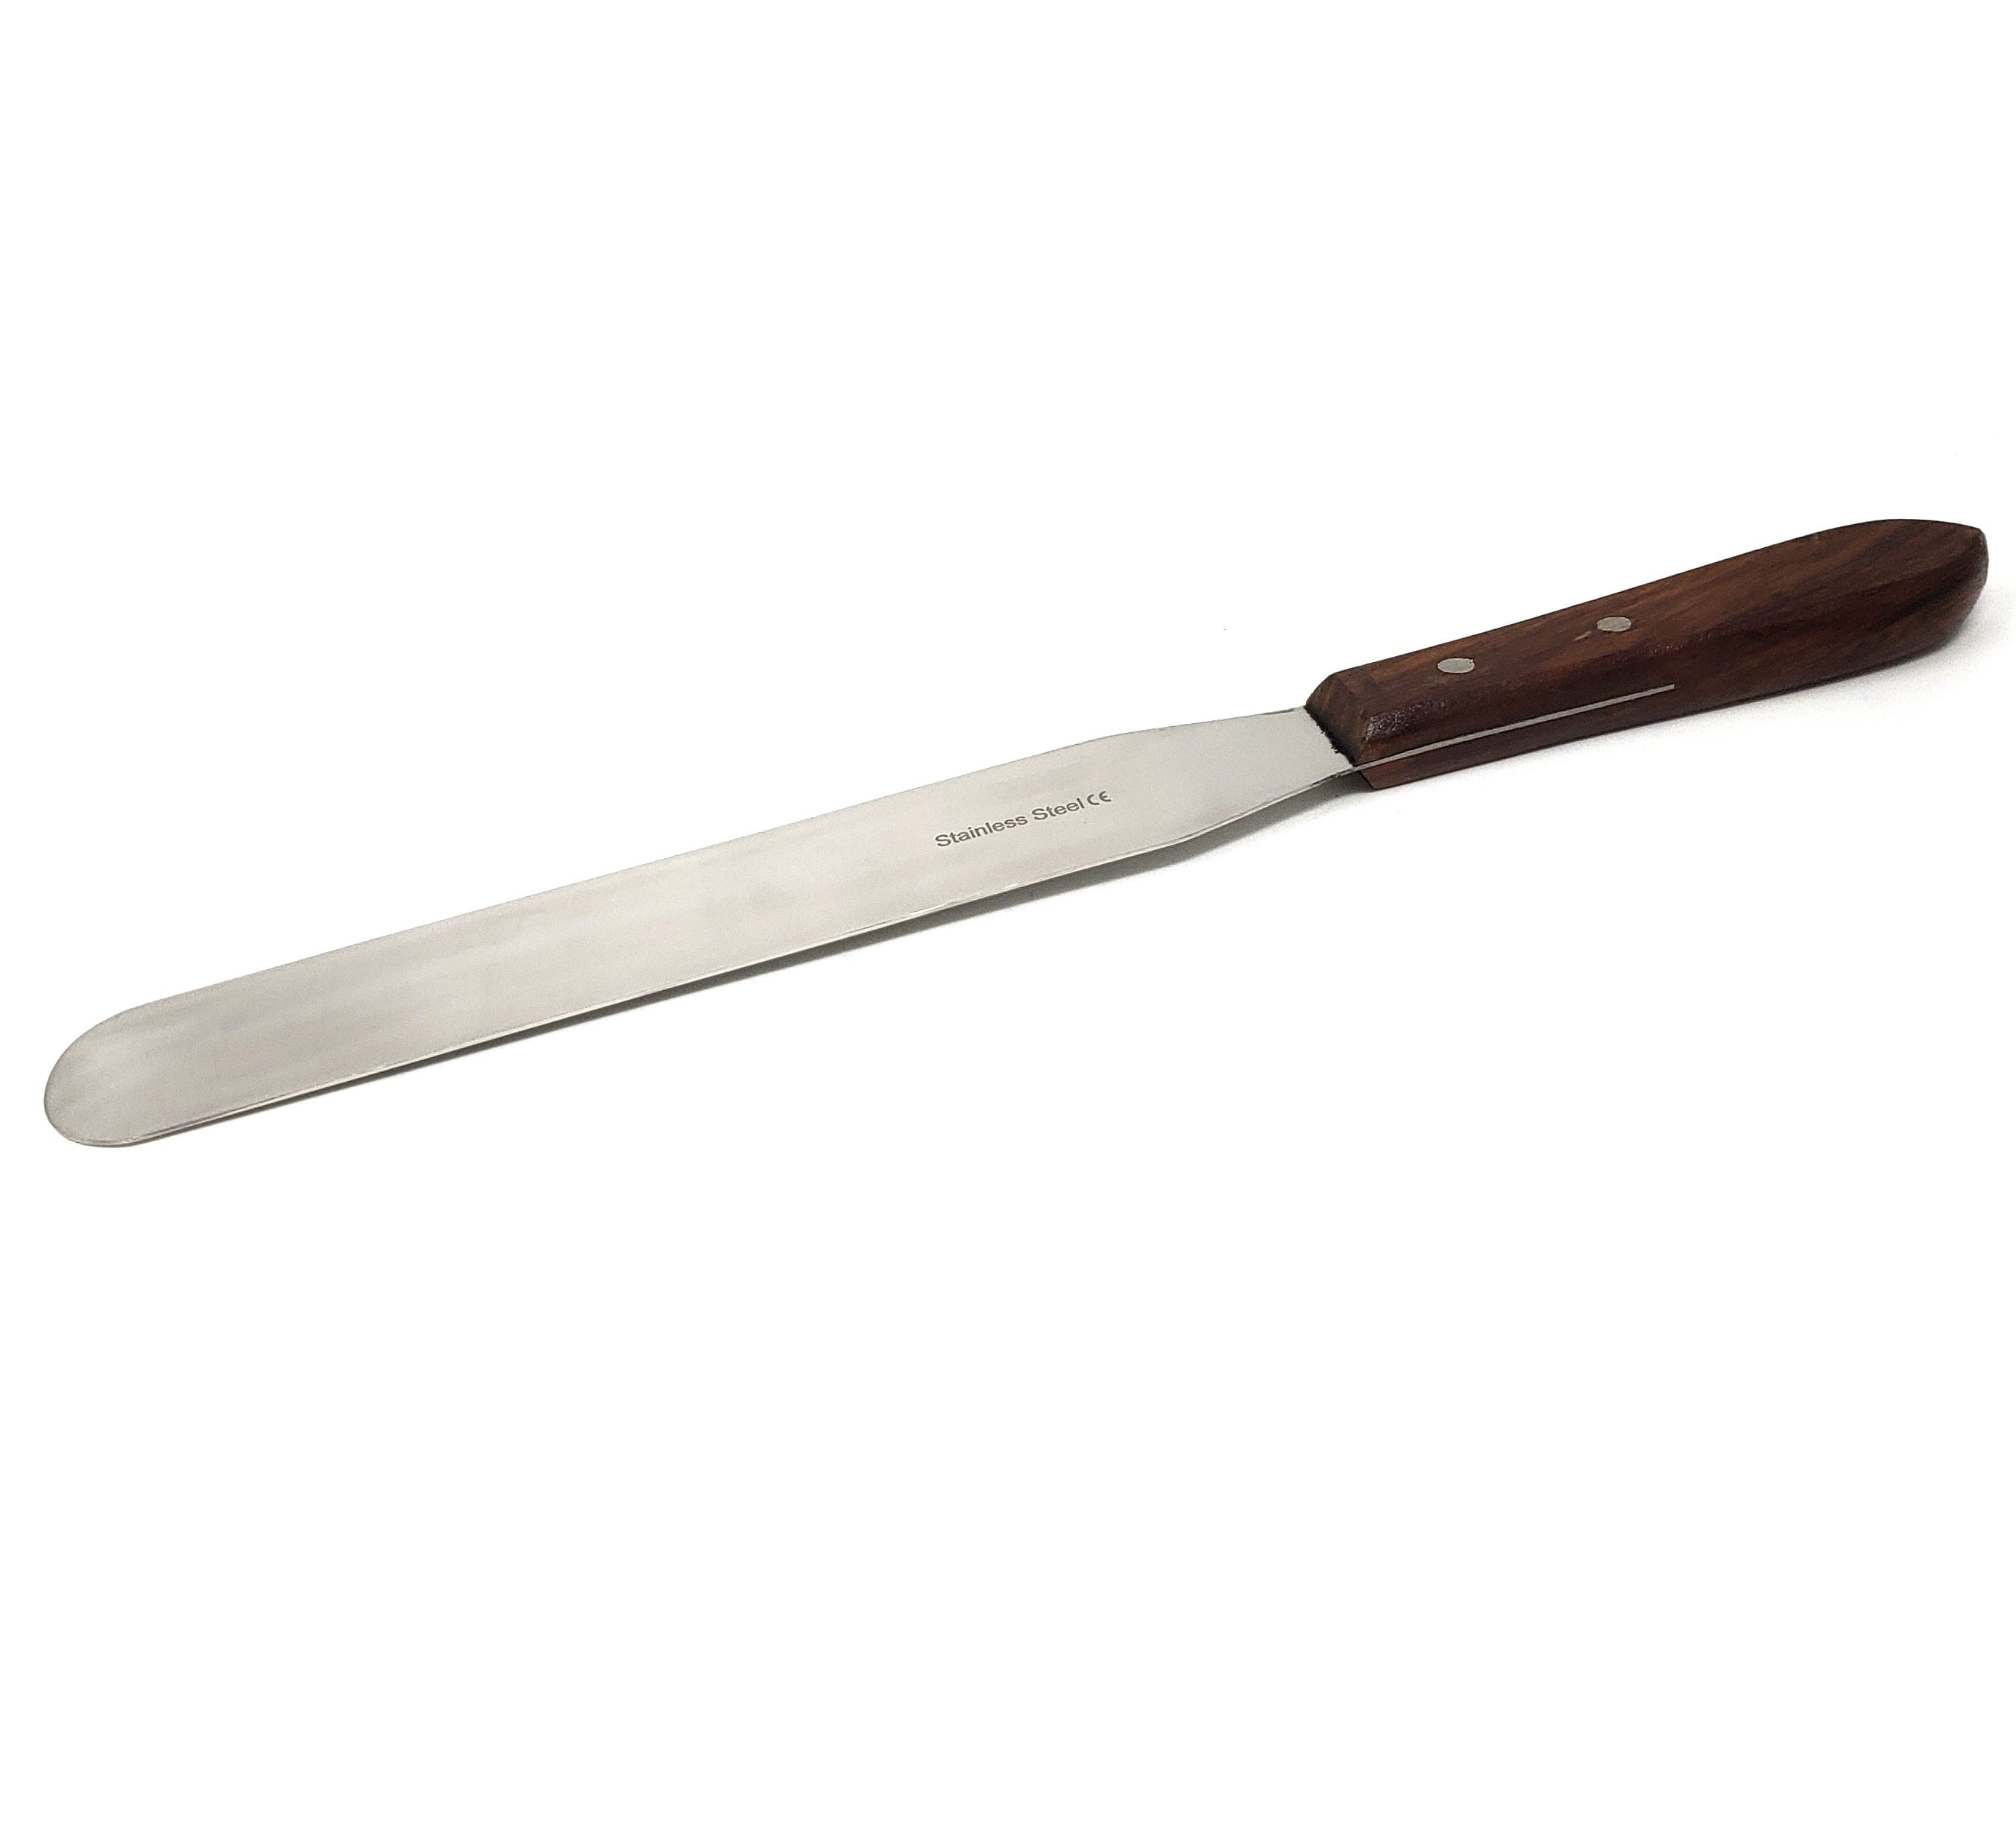 Double spatula 185mm,narrow, stiff, width 9mm - Laboratory equipment